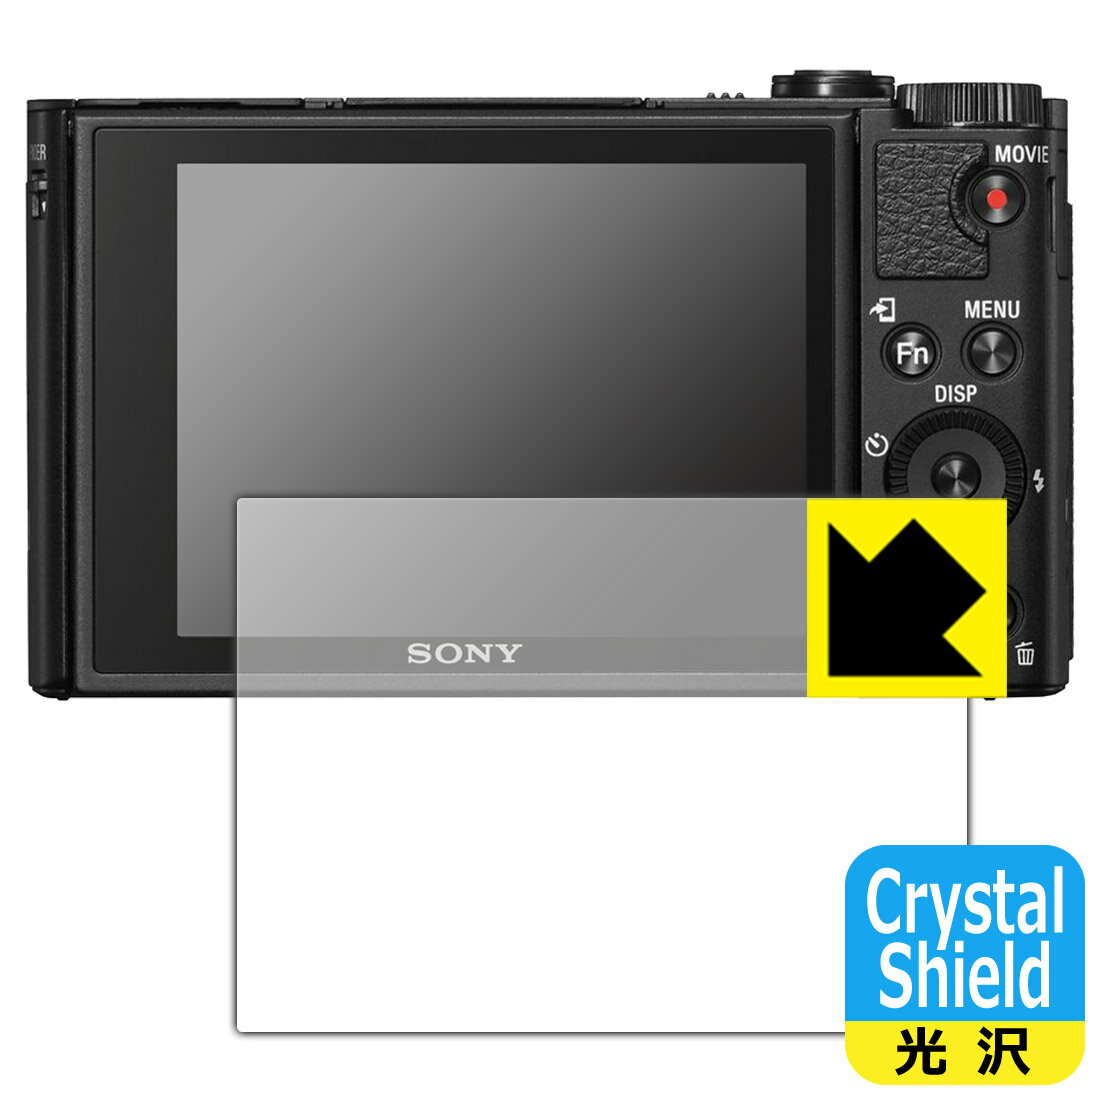 Crystal Shield Cyber-shot HX99/WX800  ¤ľ